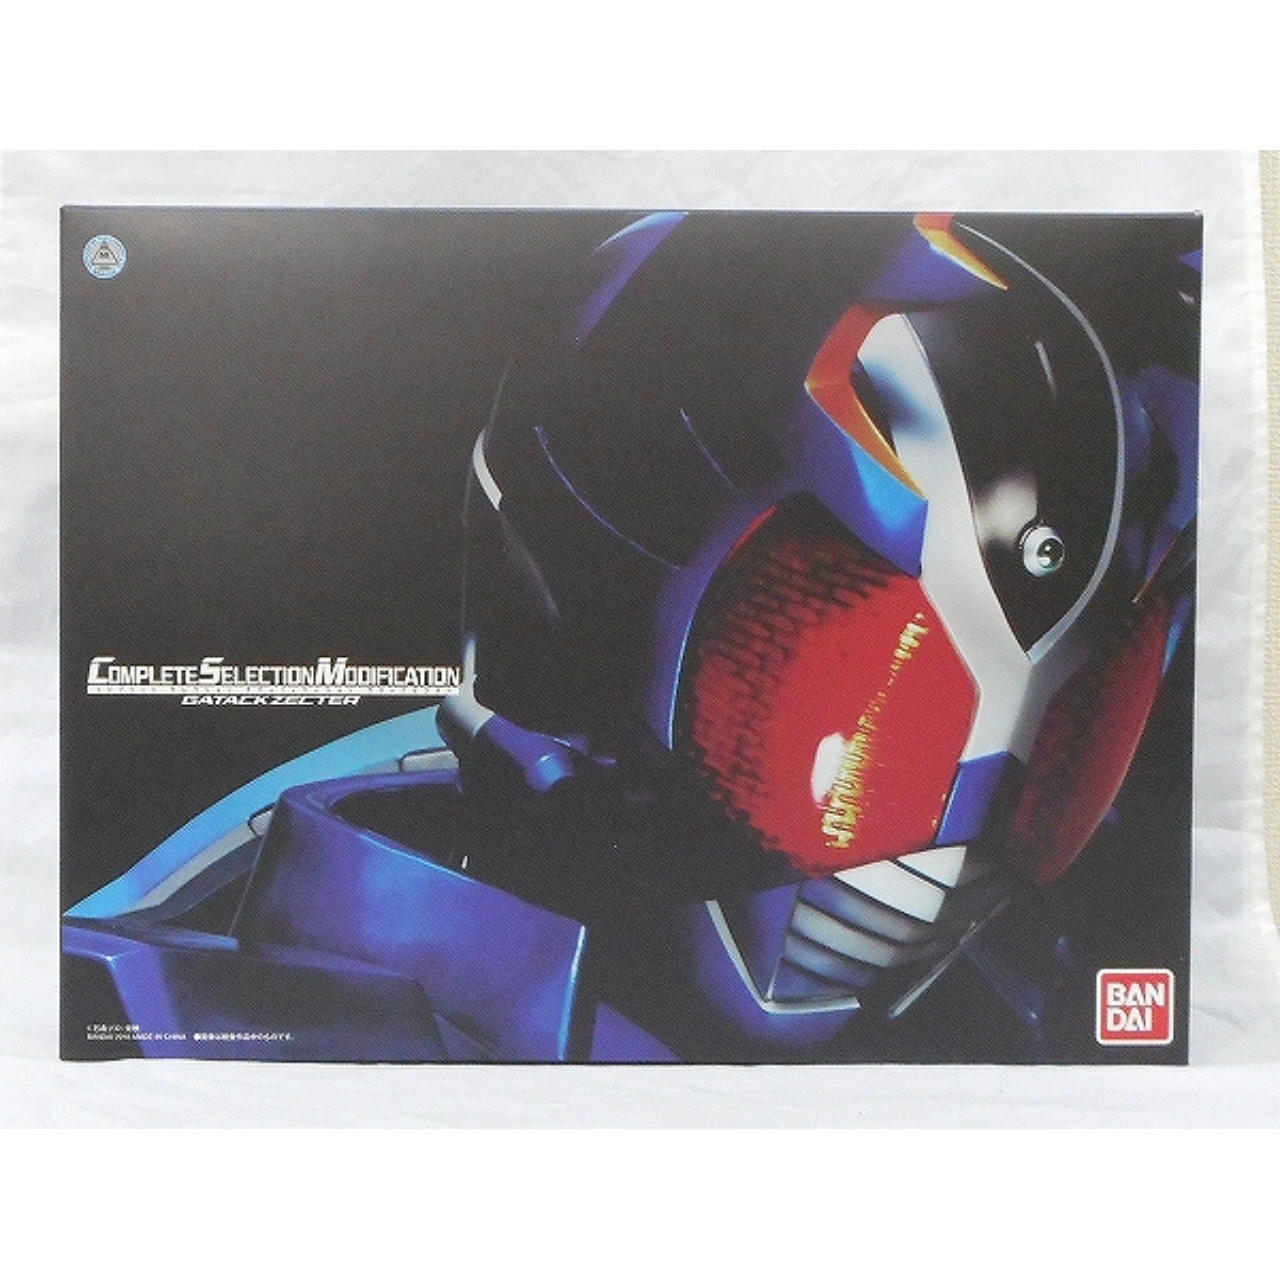 Kamen Rider Complete Selection Modification Gatackzecter